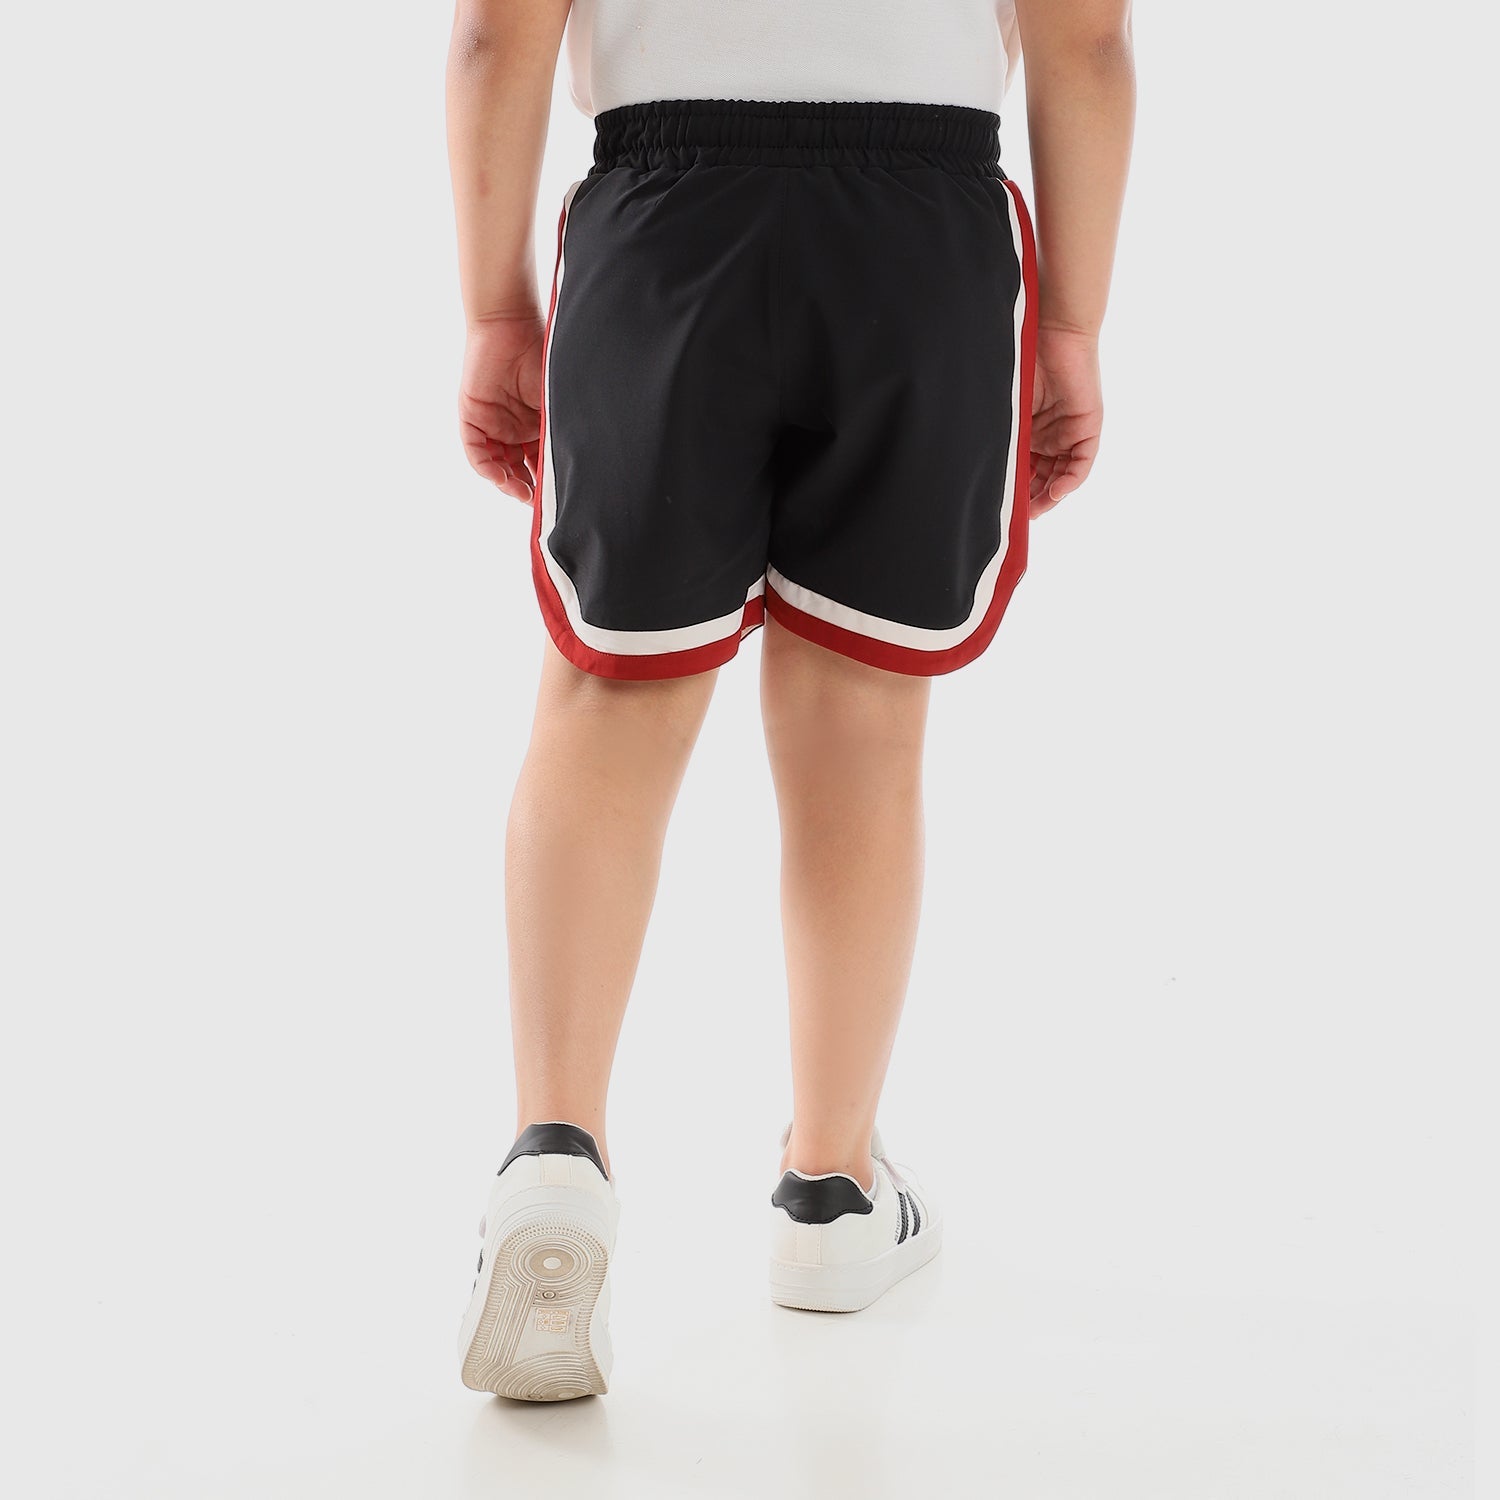 Boys Tri-Tone Comfy Slip On Sportive Shorts - Black, White & Red - Sporty Pro